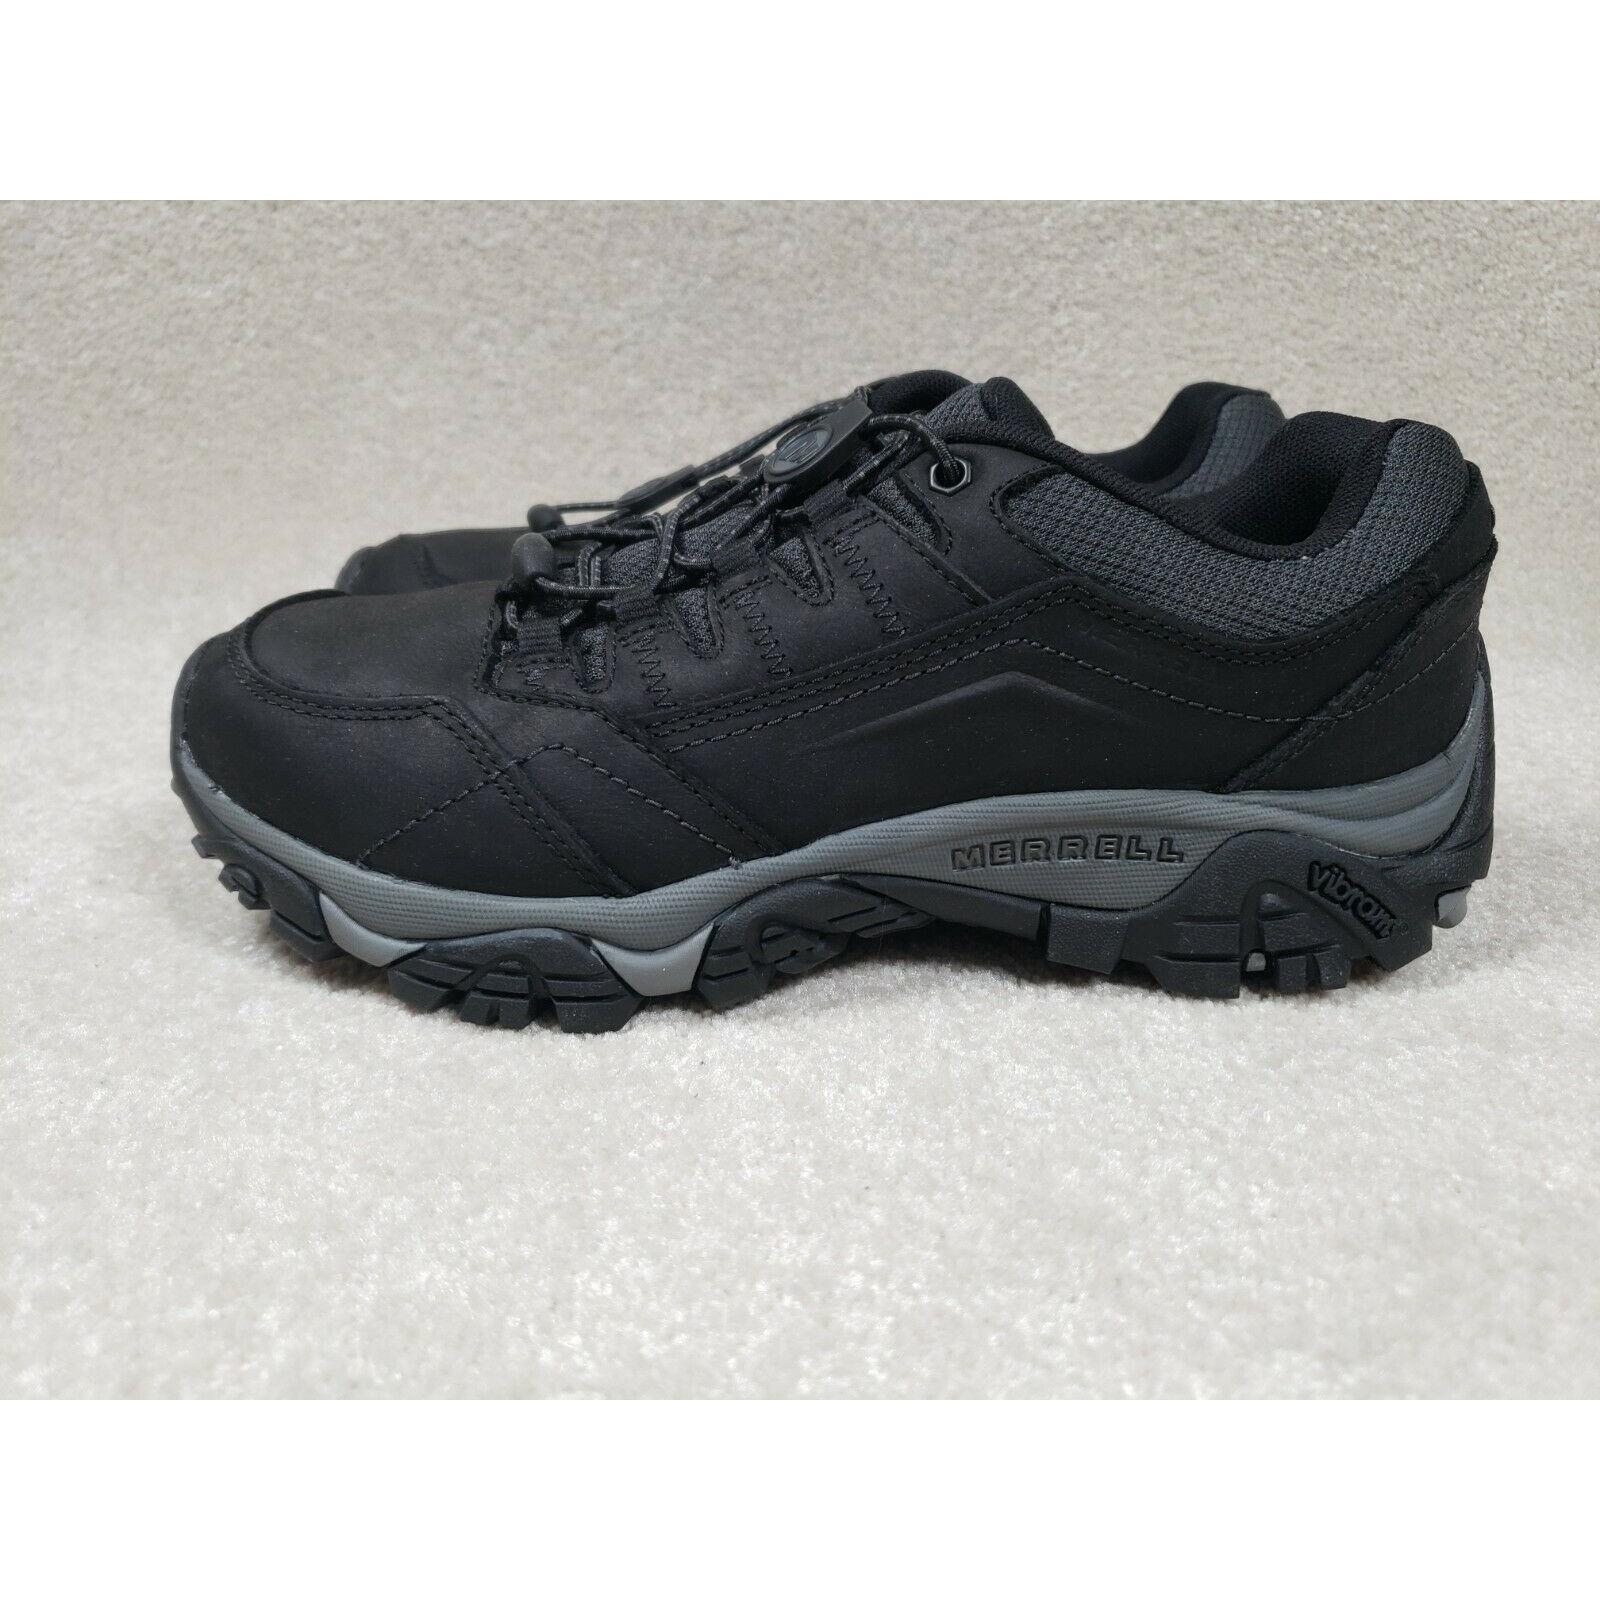 Merrell Men`s Hiking Shoes Size 8 Walking Outdoor Moab Adventure Black